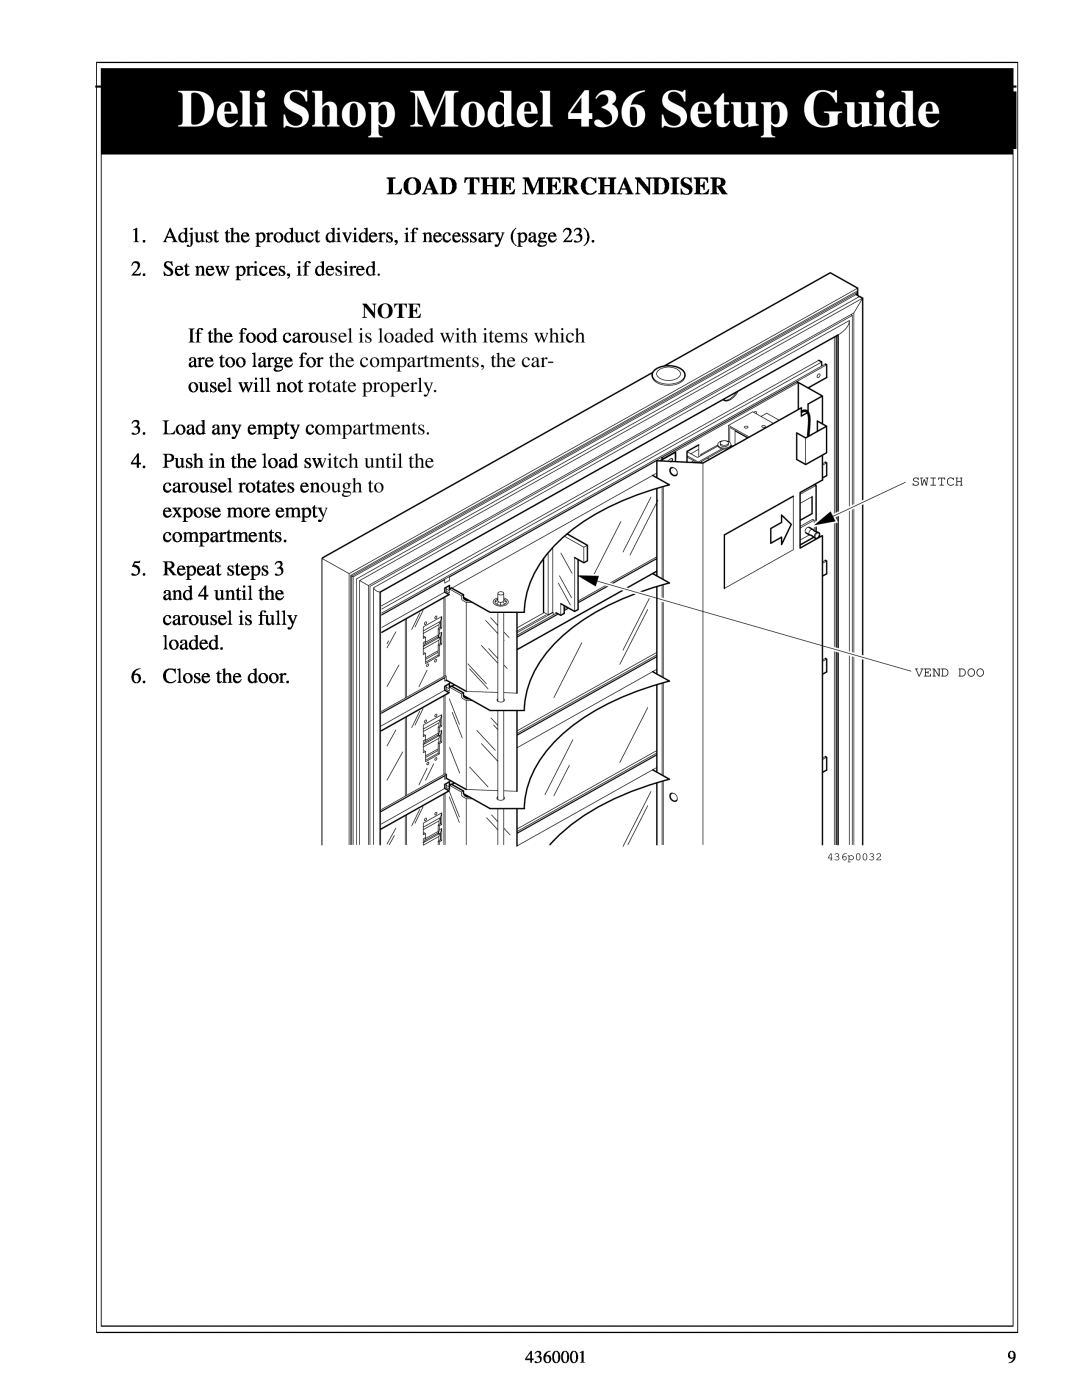 Crane Merchandising Systems manual Load The Merchandiser, Deli Shop Model 436 Setup Guide 